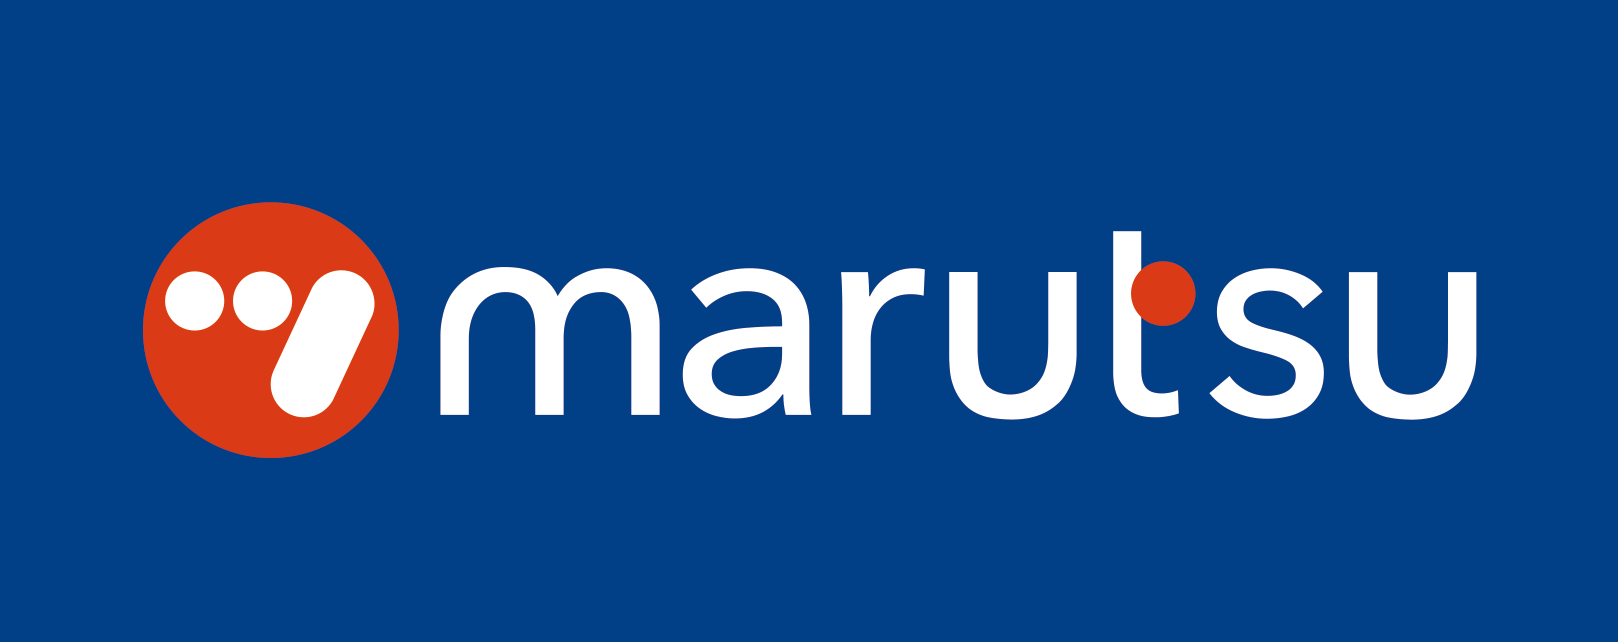 Marutsuelec Co., Ltd.